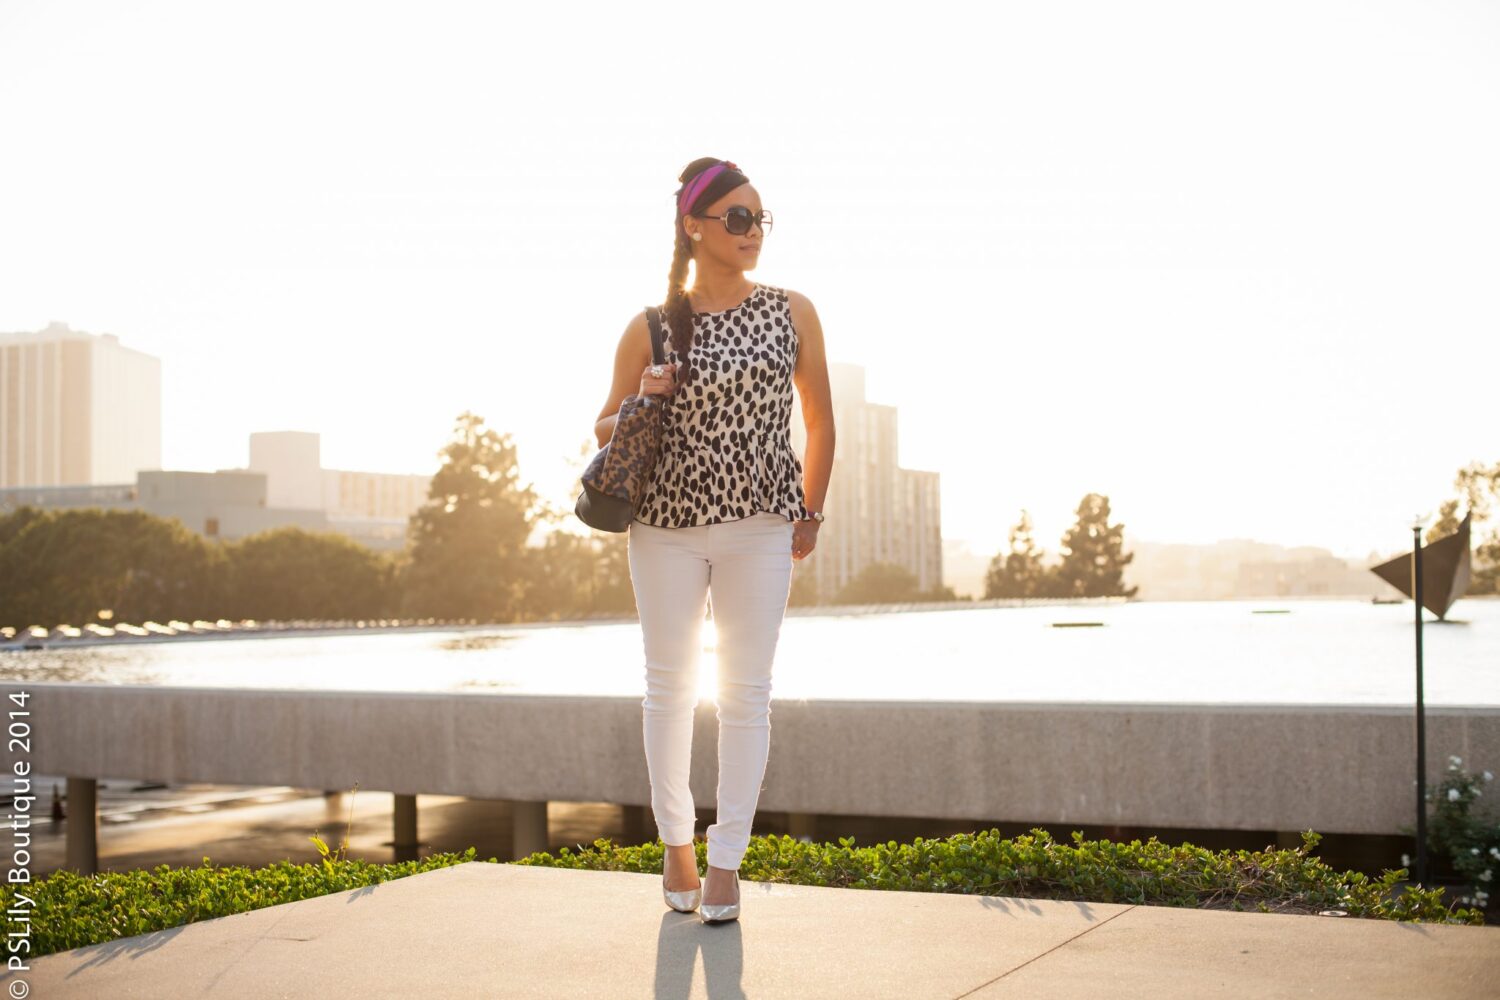 instagram-pslilyboutique, LA fashion blogger, best fashion blogger, white skinny jeans, h&m leopard print top, calvin klein pumps, street fashion, spring outfit ideas